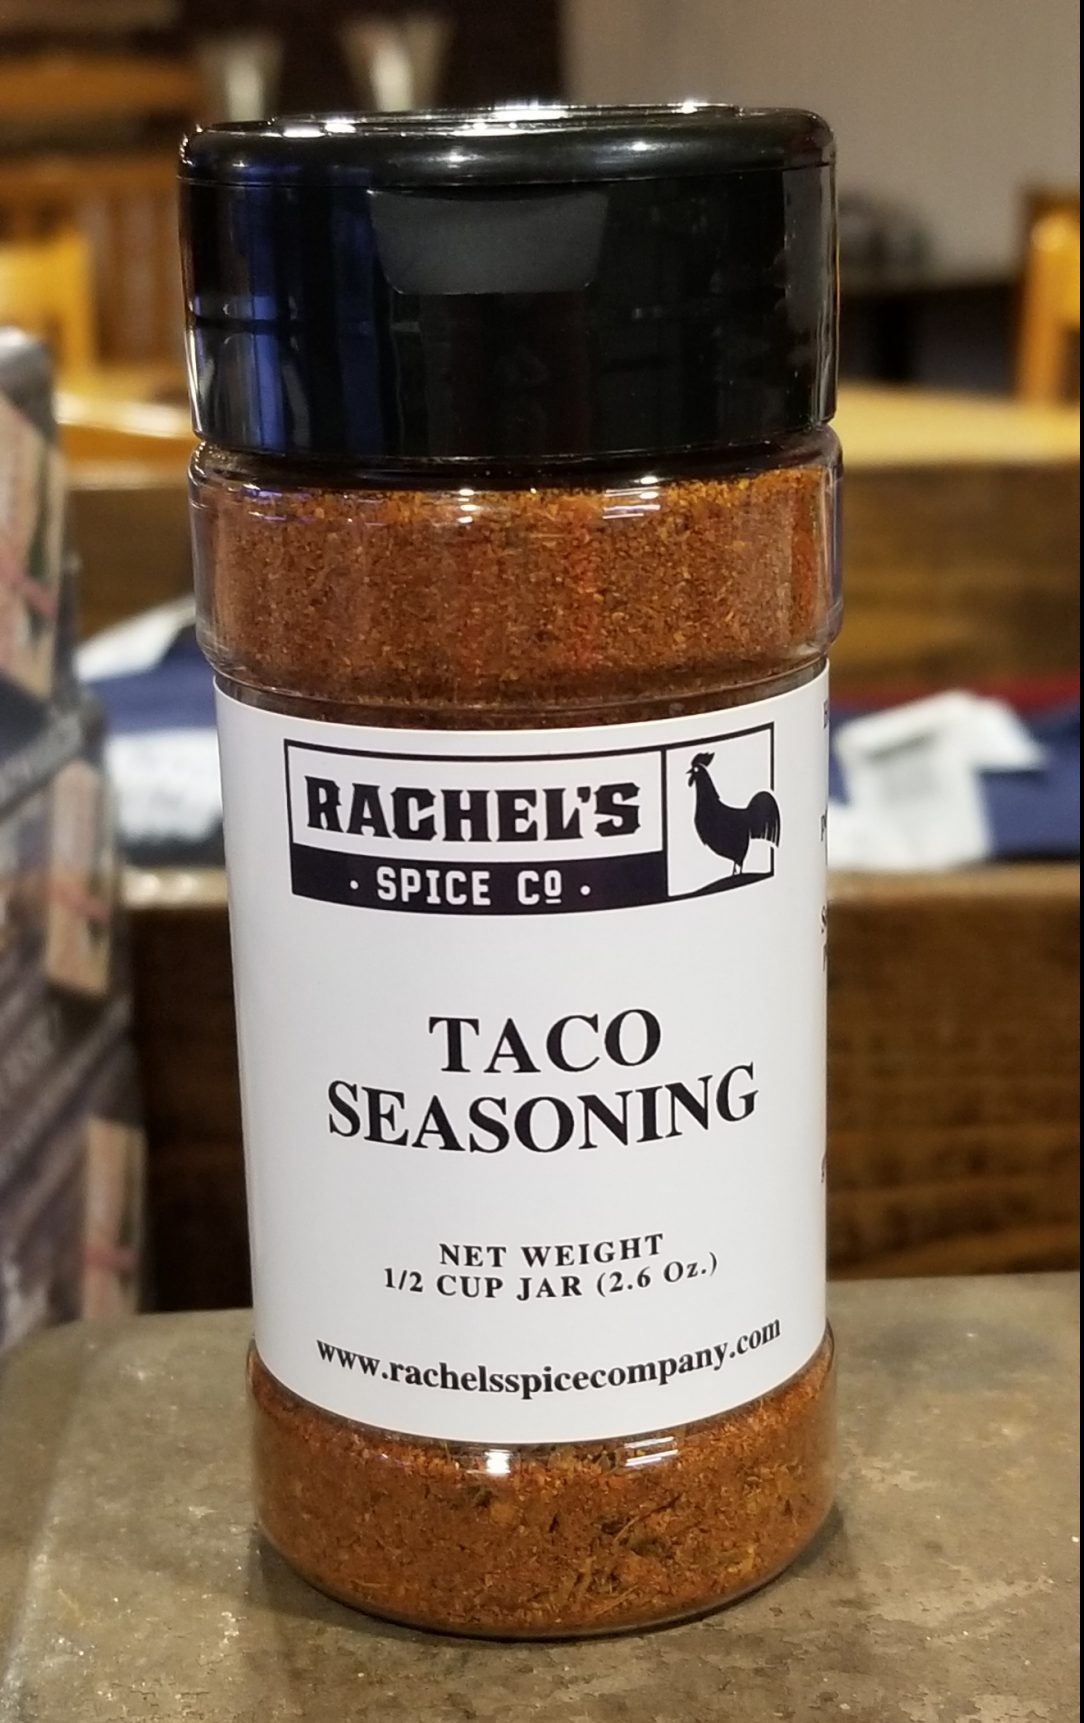 https://rachelsspicecompany.com/wp-content/uploads/2018/08/taco-seasoning-e1608041915247.jpg